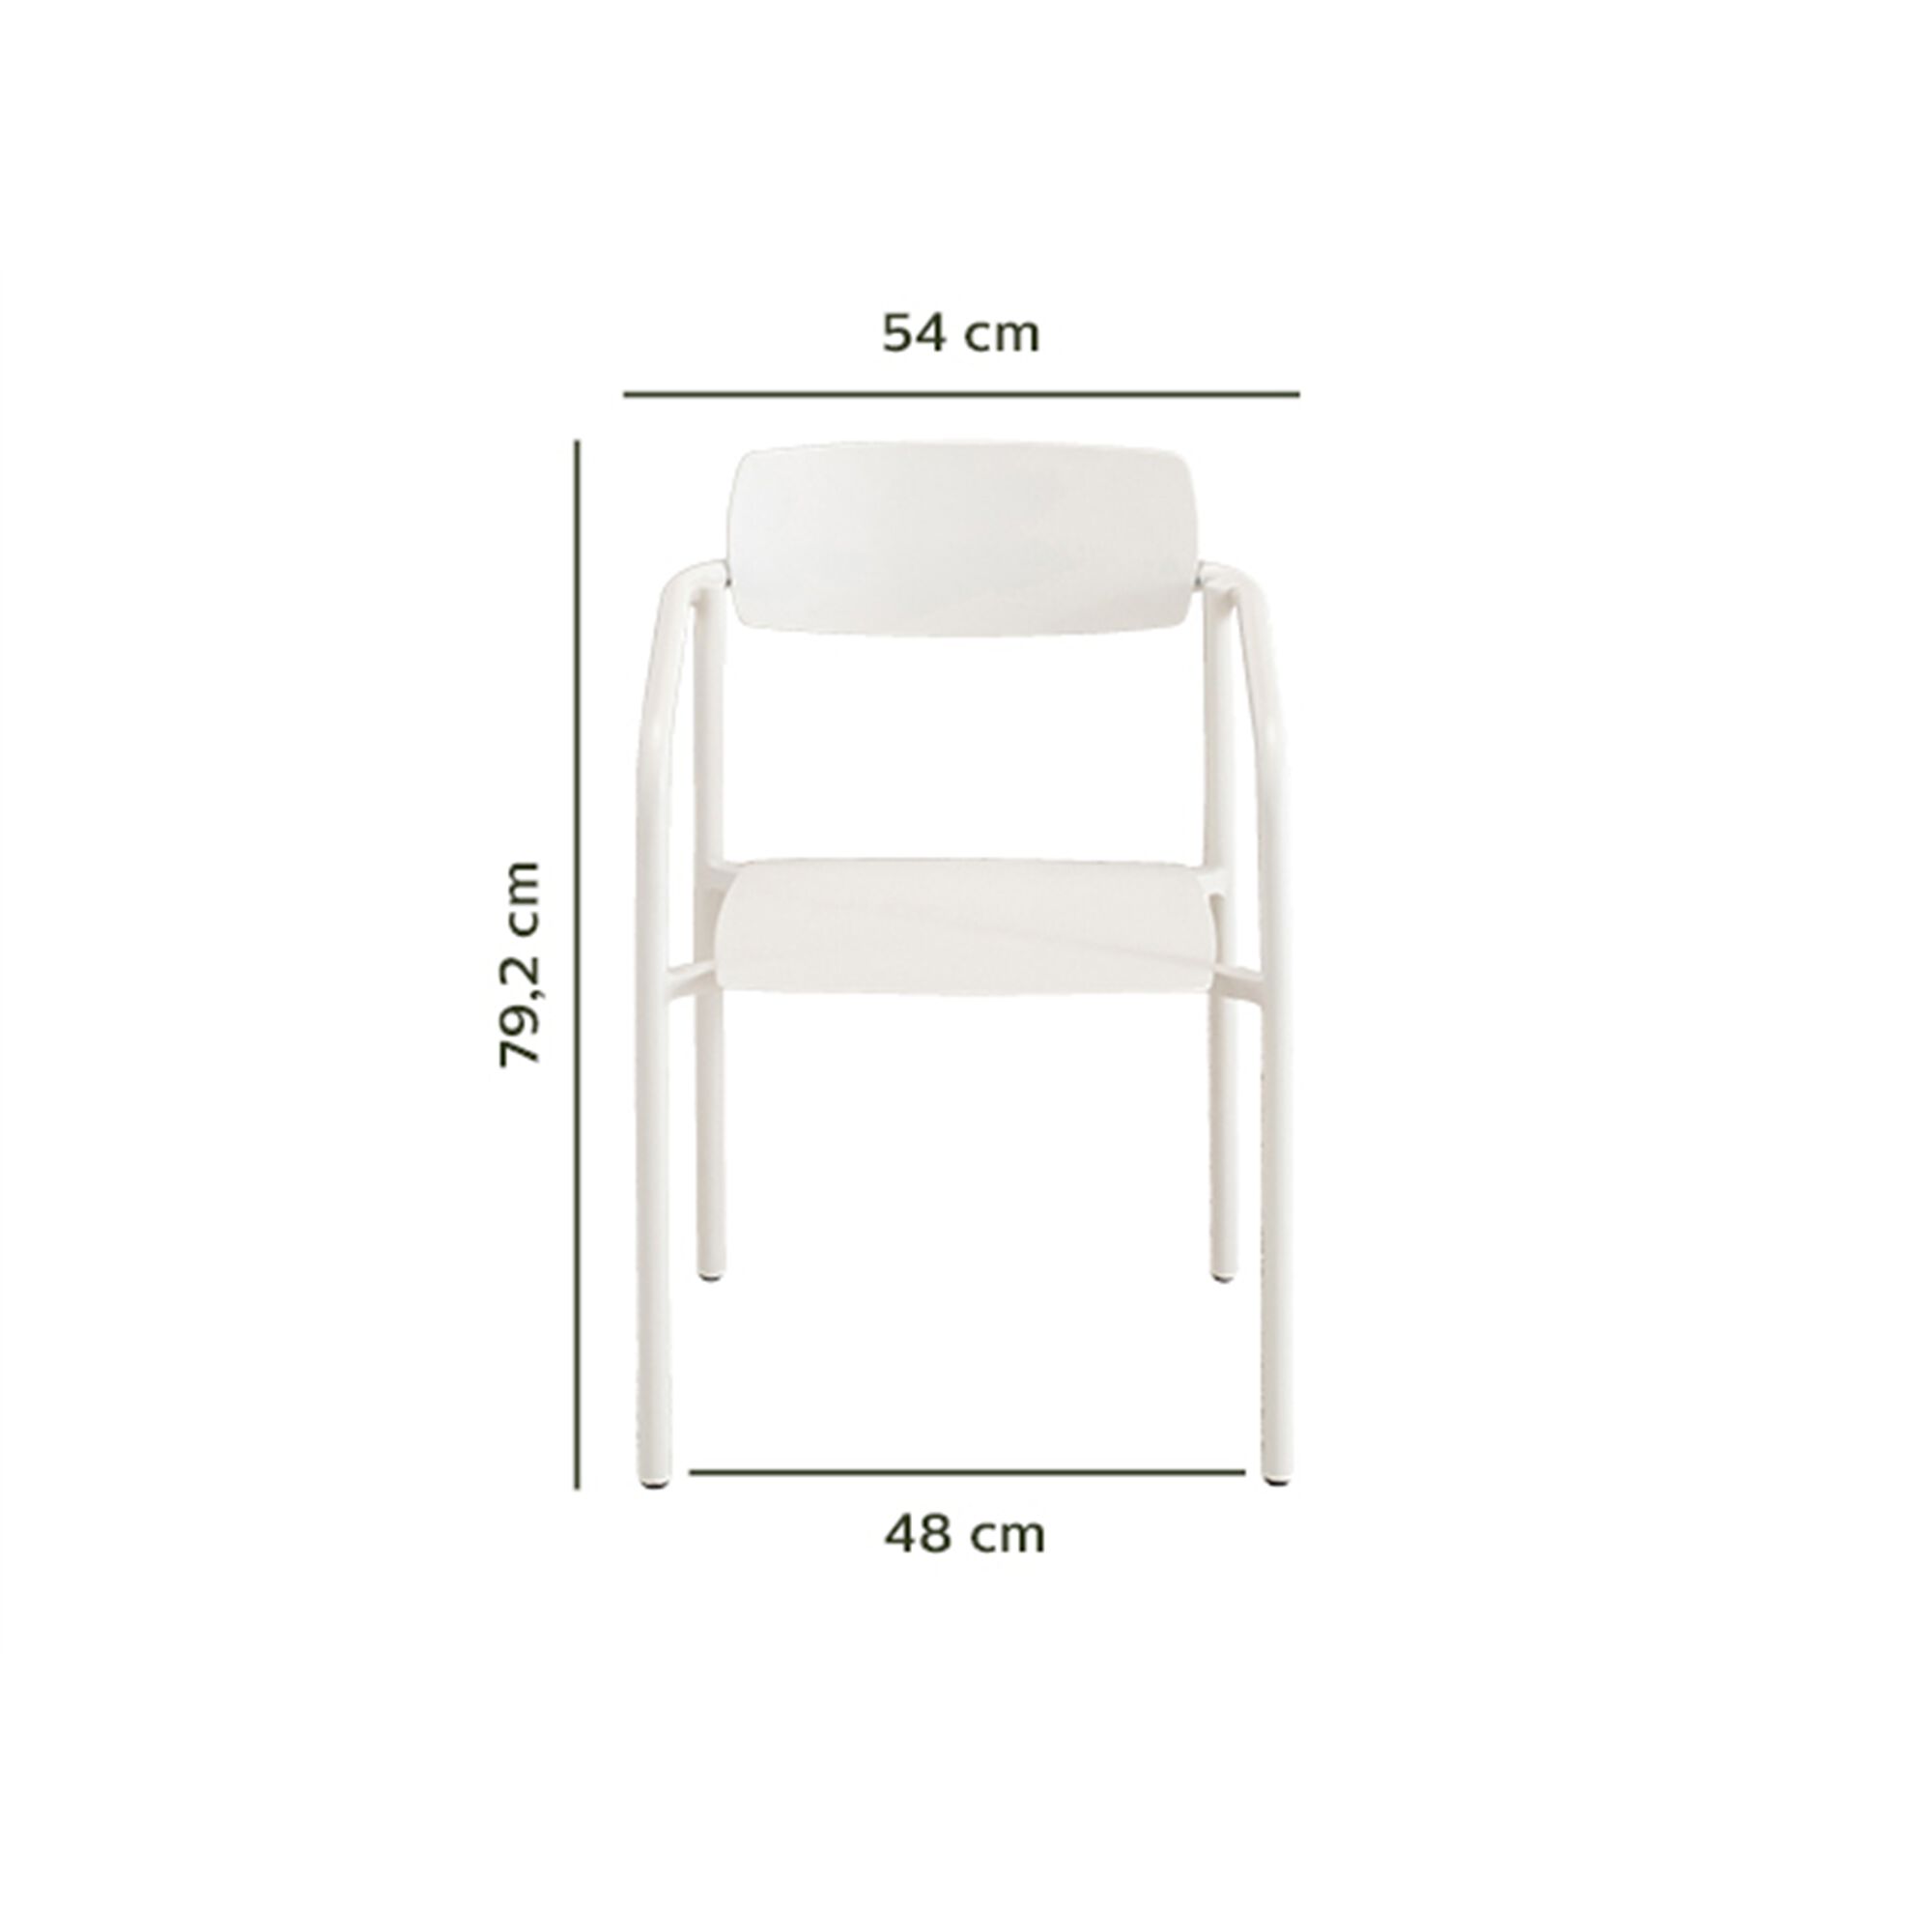 Chaise de jardin avec accoudoirs en aluminium - blanc-JINOLA